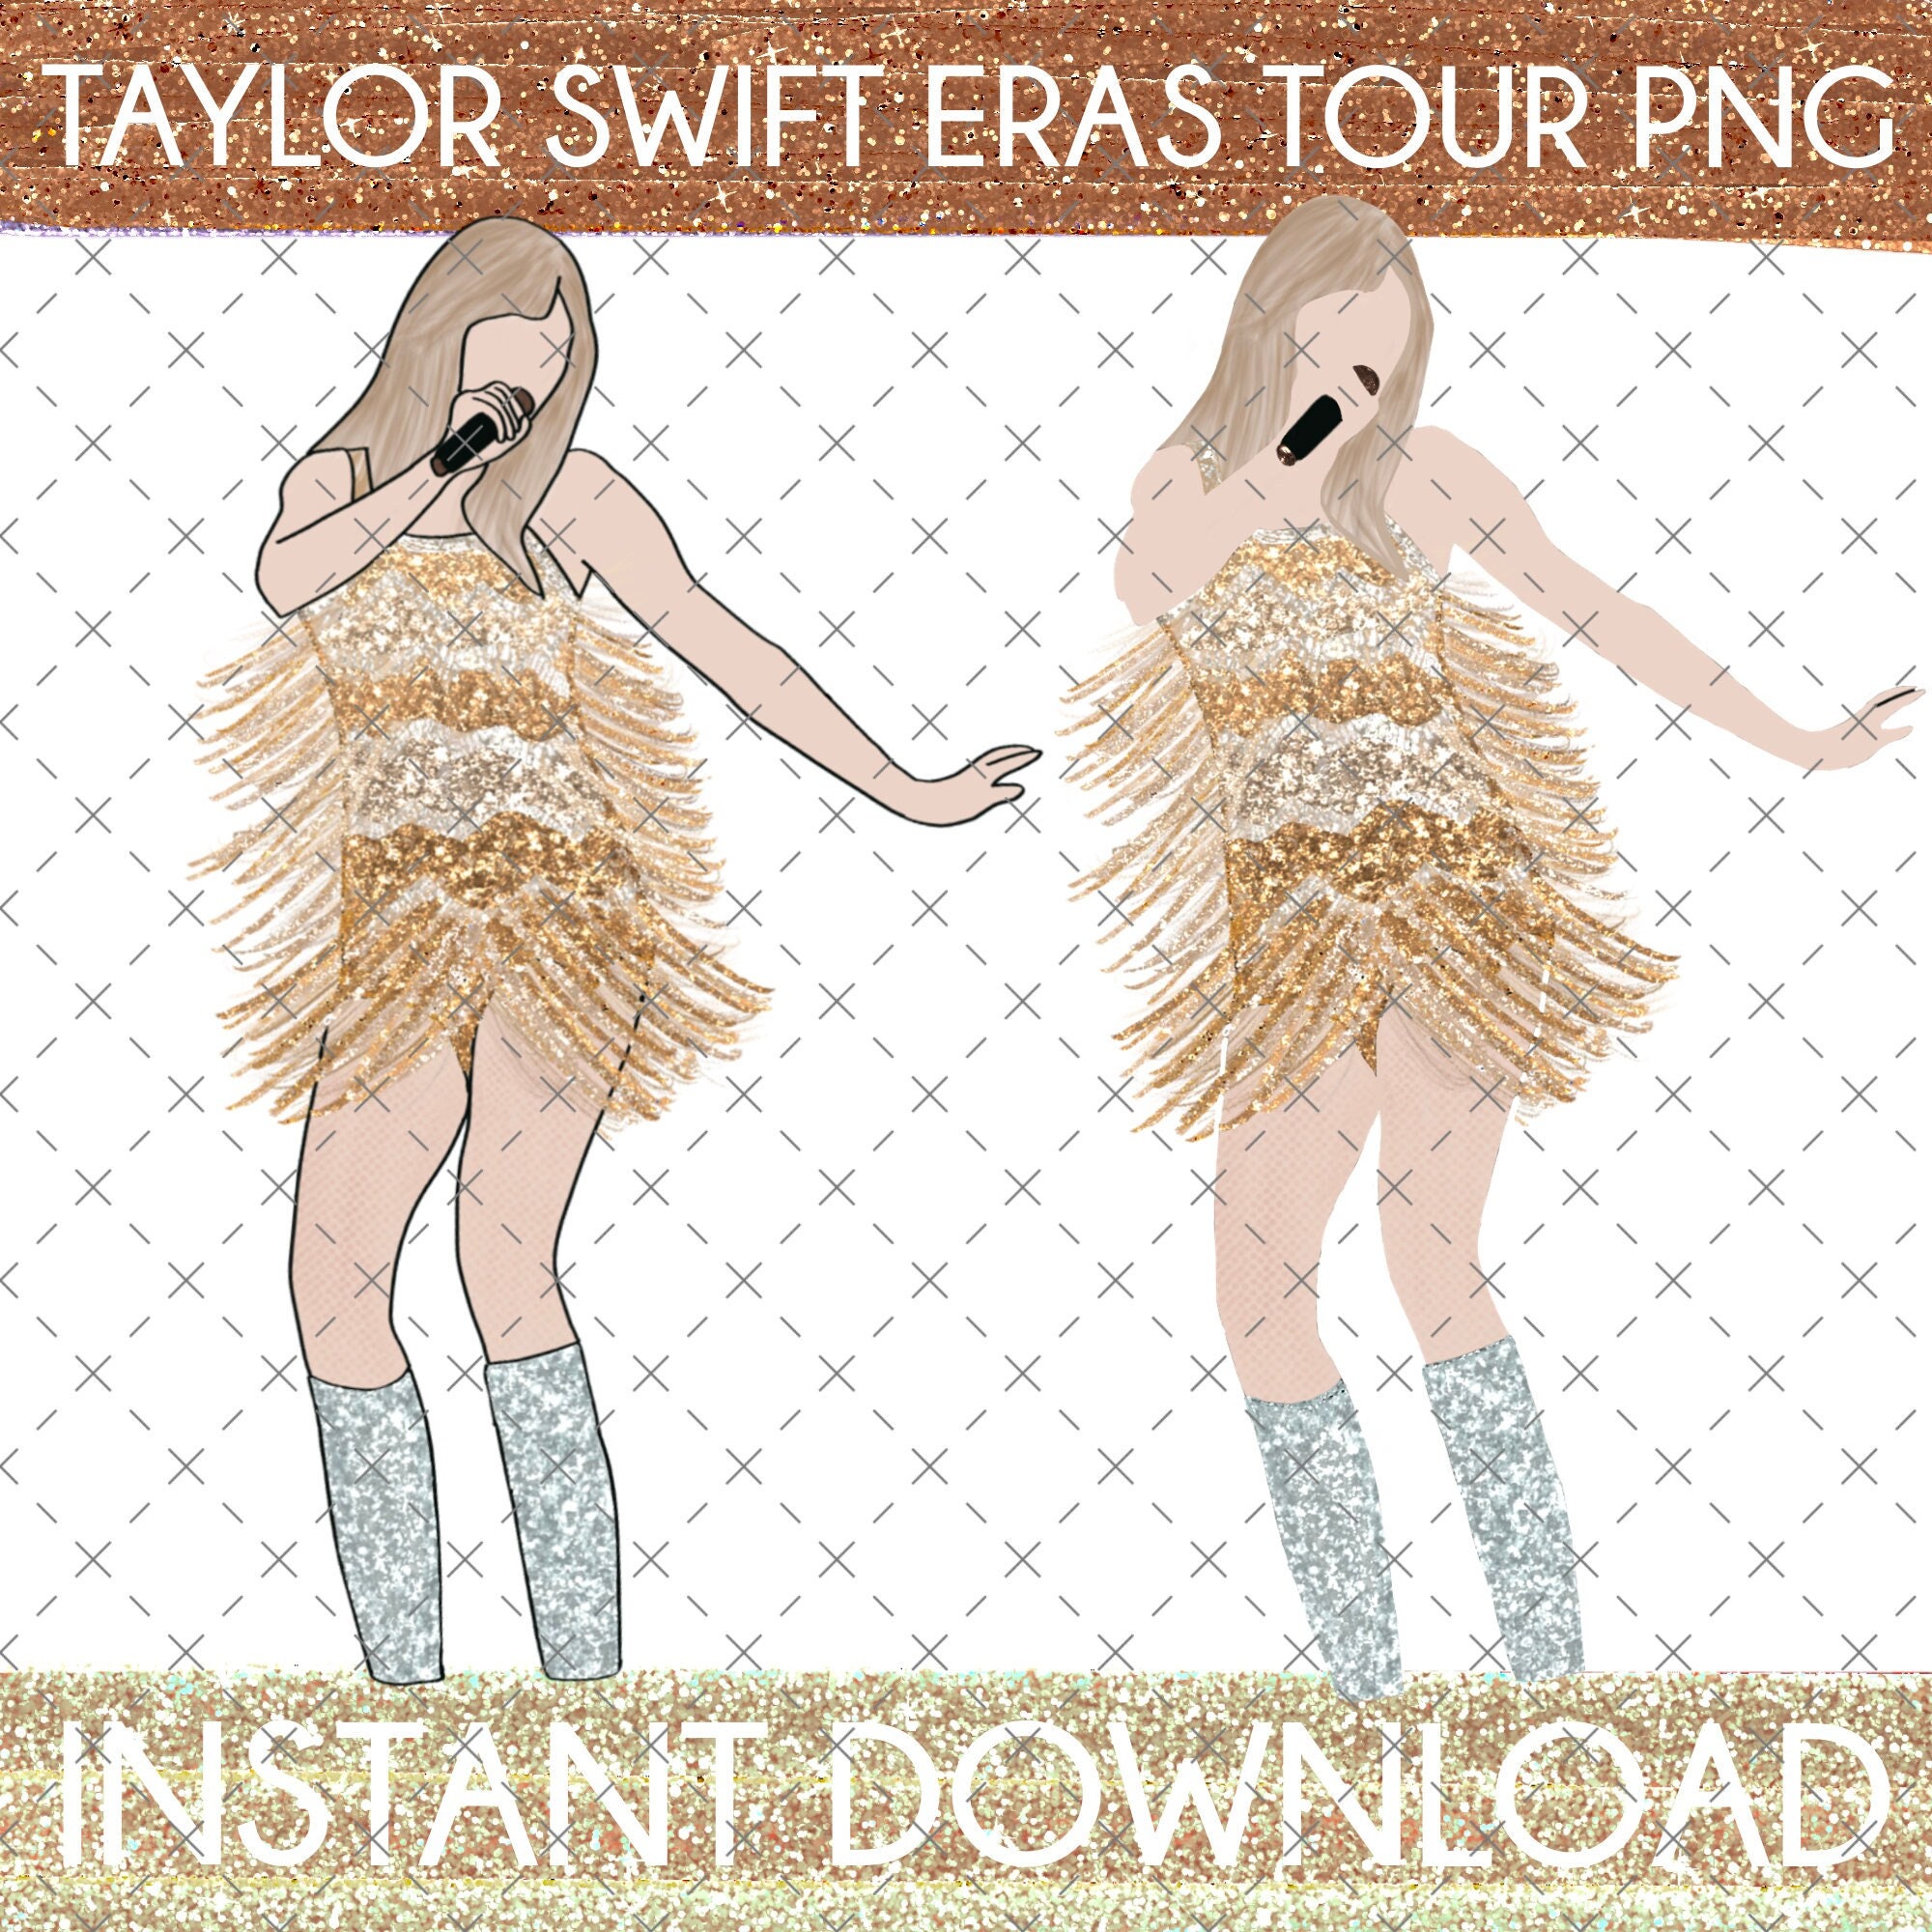 Eras Tour Taylor Swift PRINTABLE Life Size Cut Out Cardboard